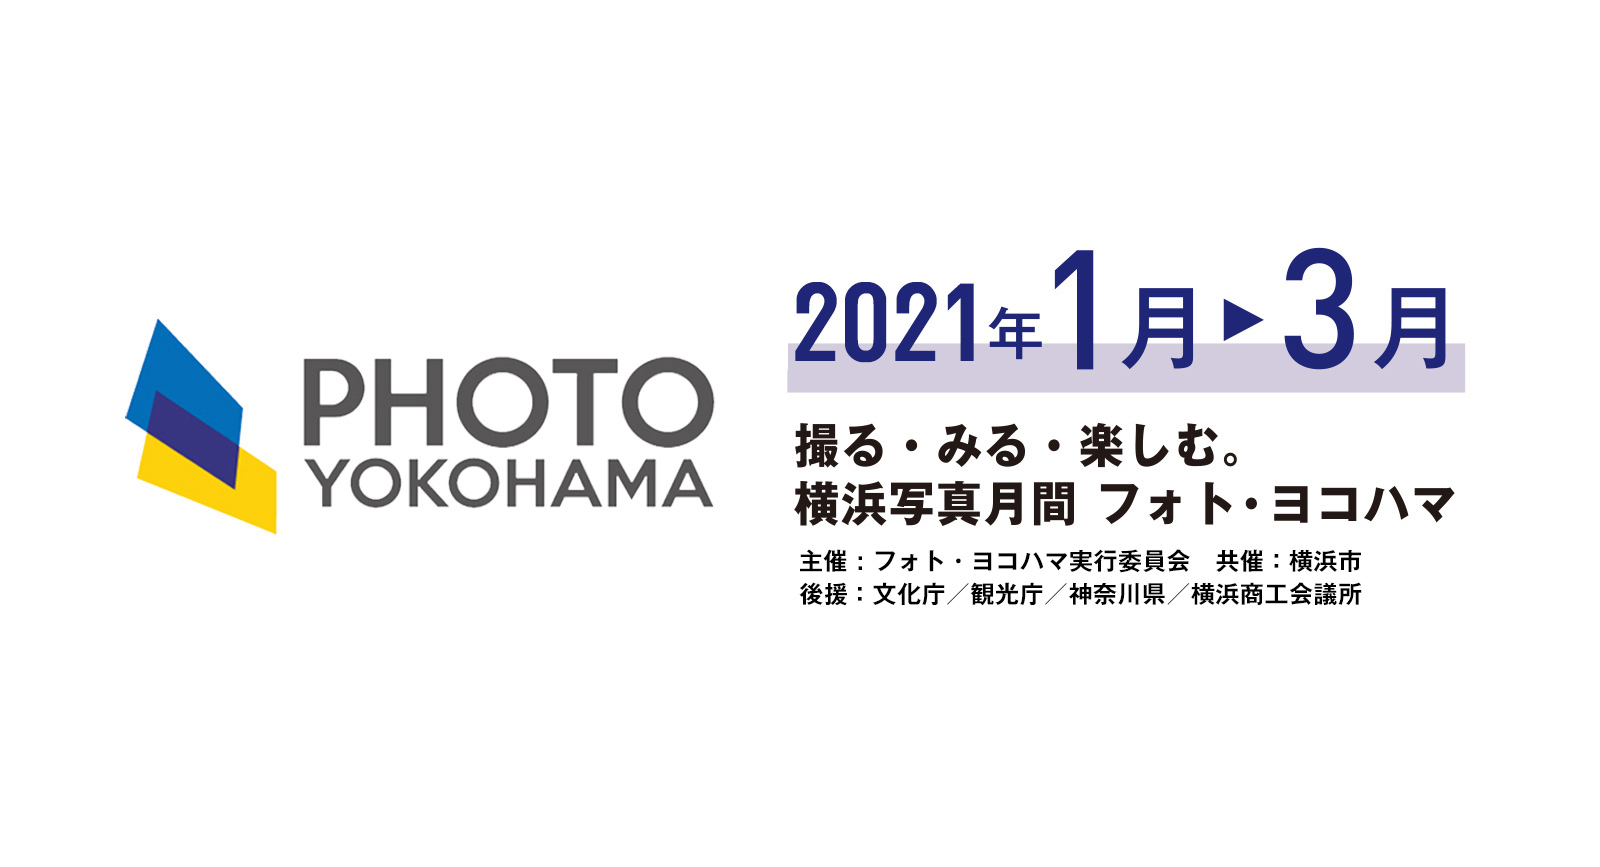 PHOTO YOKOHAMA 2021（フォト・ヨコハマ2021）